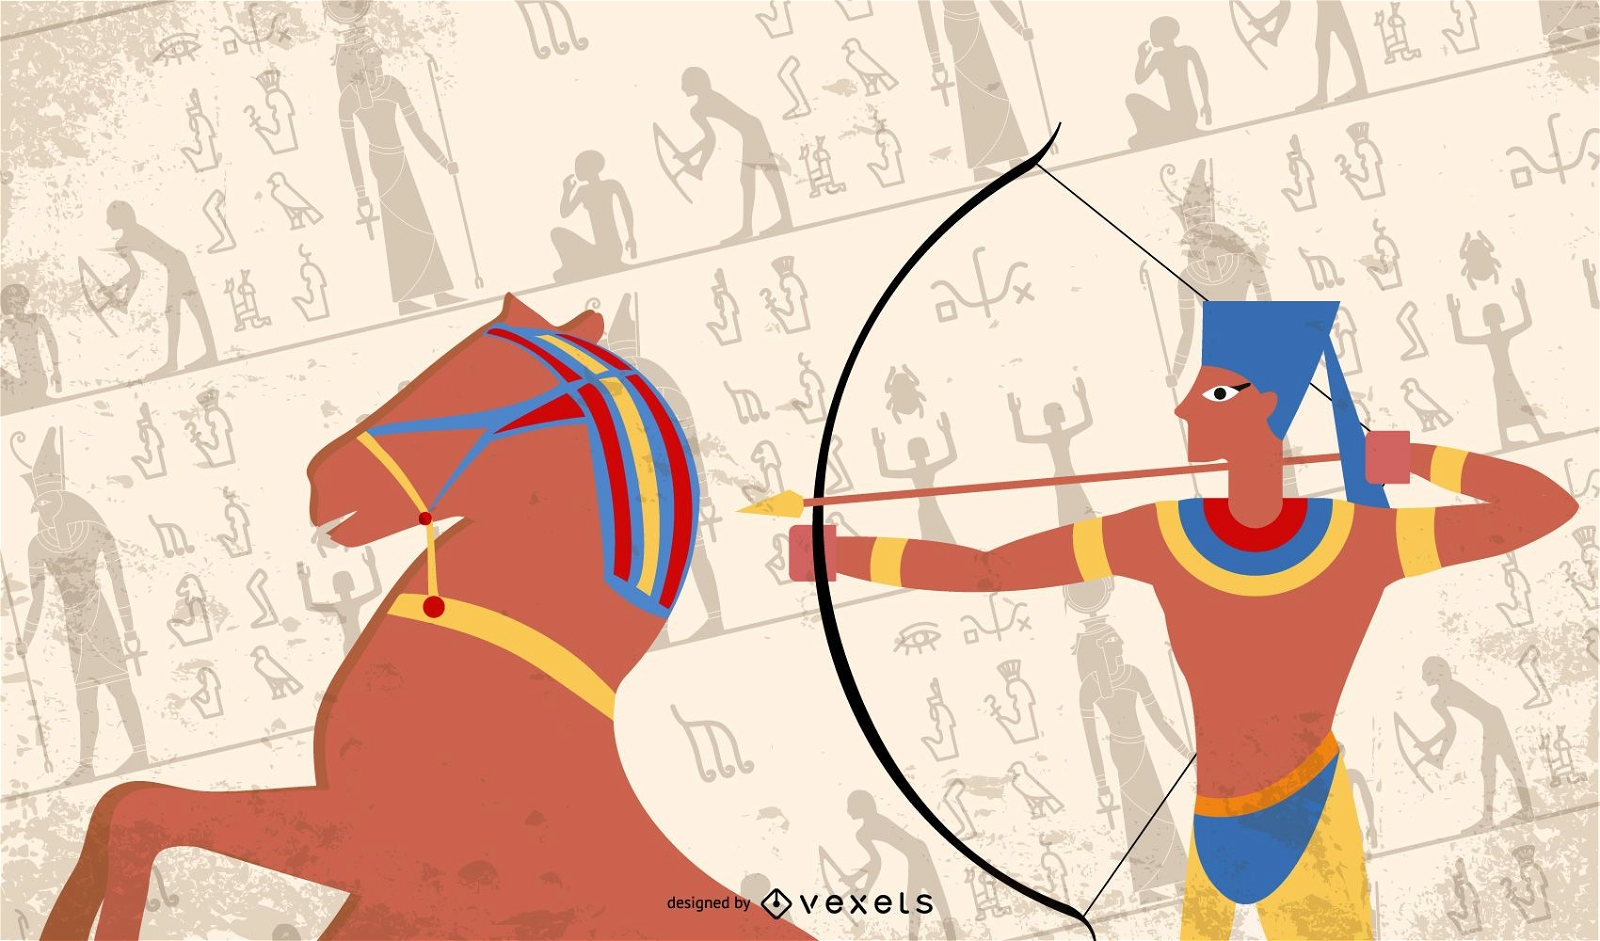 Rams?s II en la batalla de Kadesh